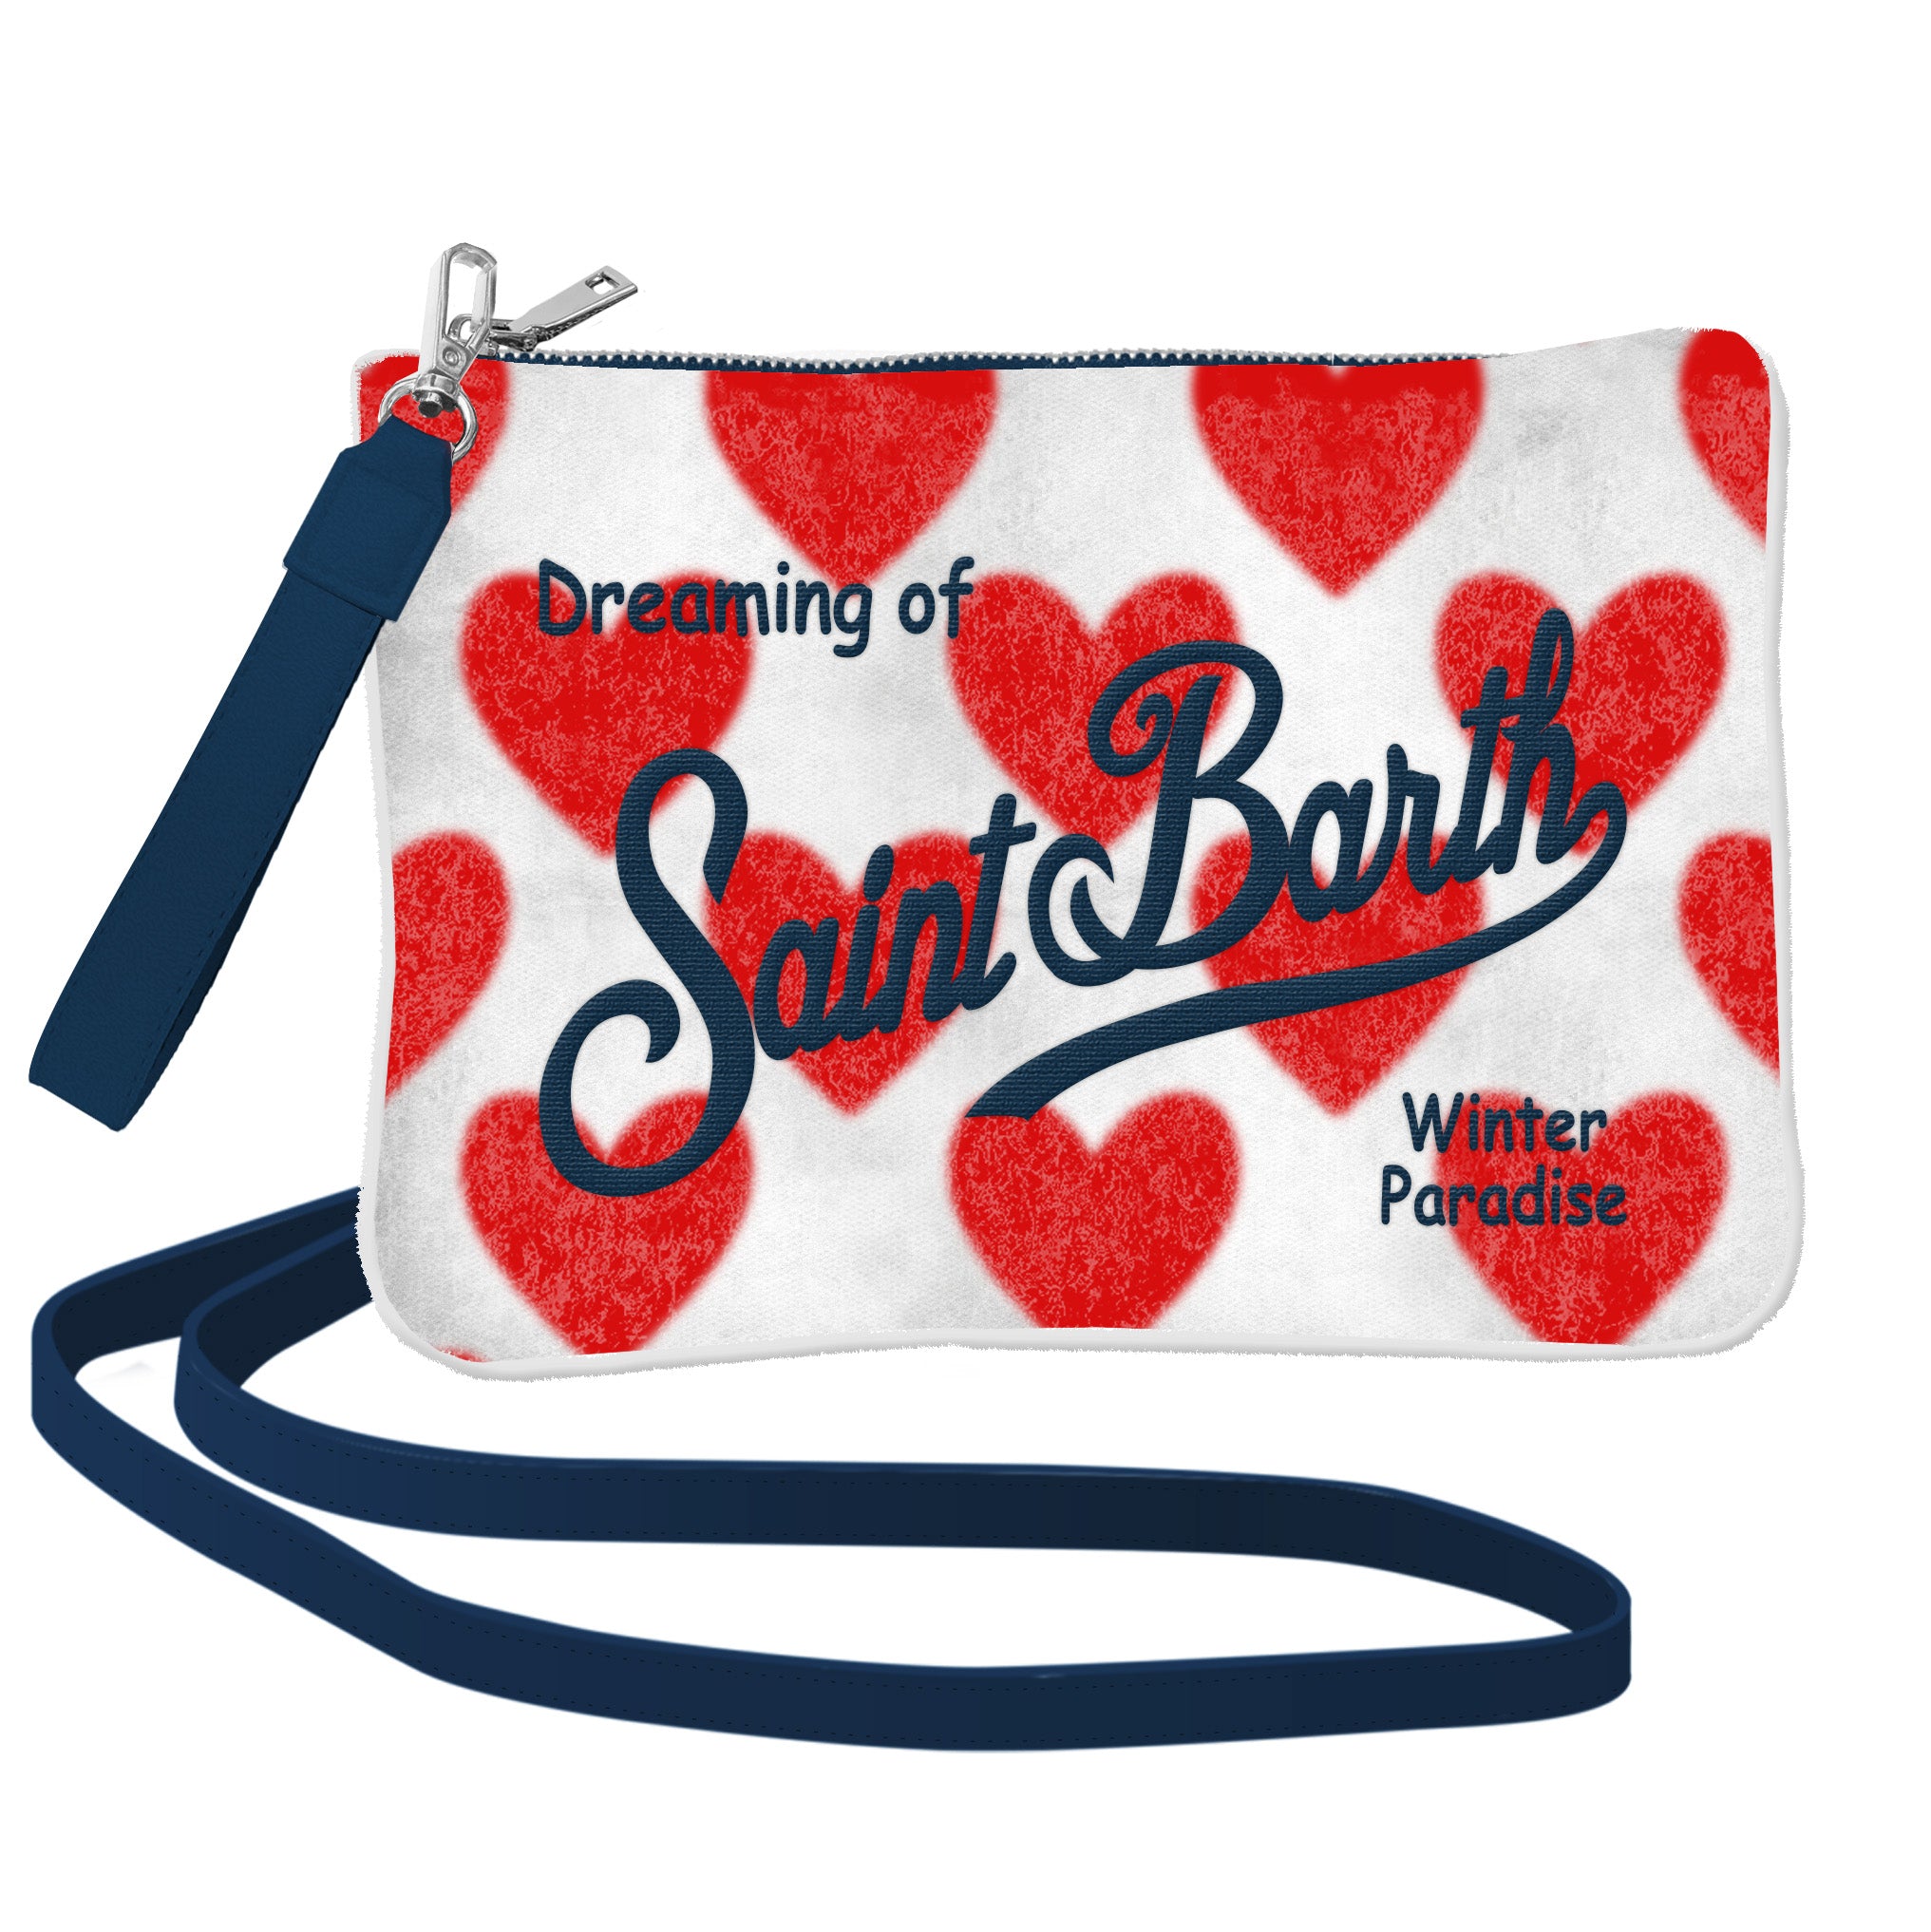 Winter Parisienne Hearts clutch bag